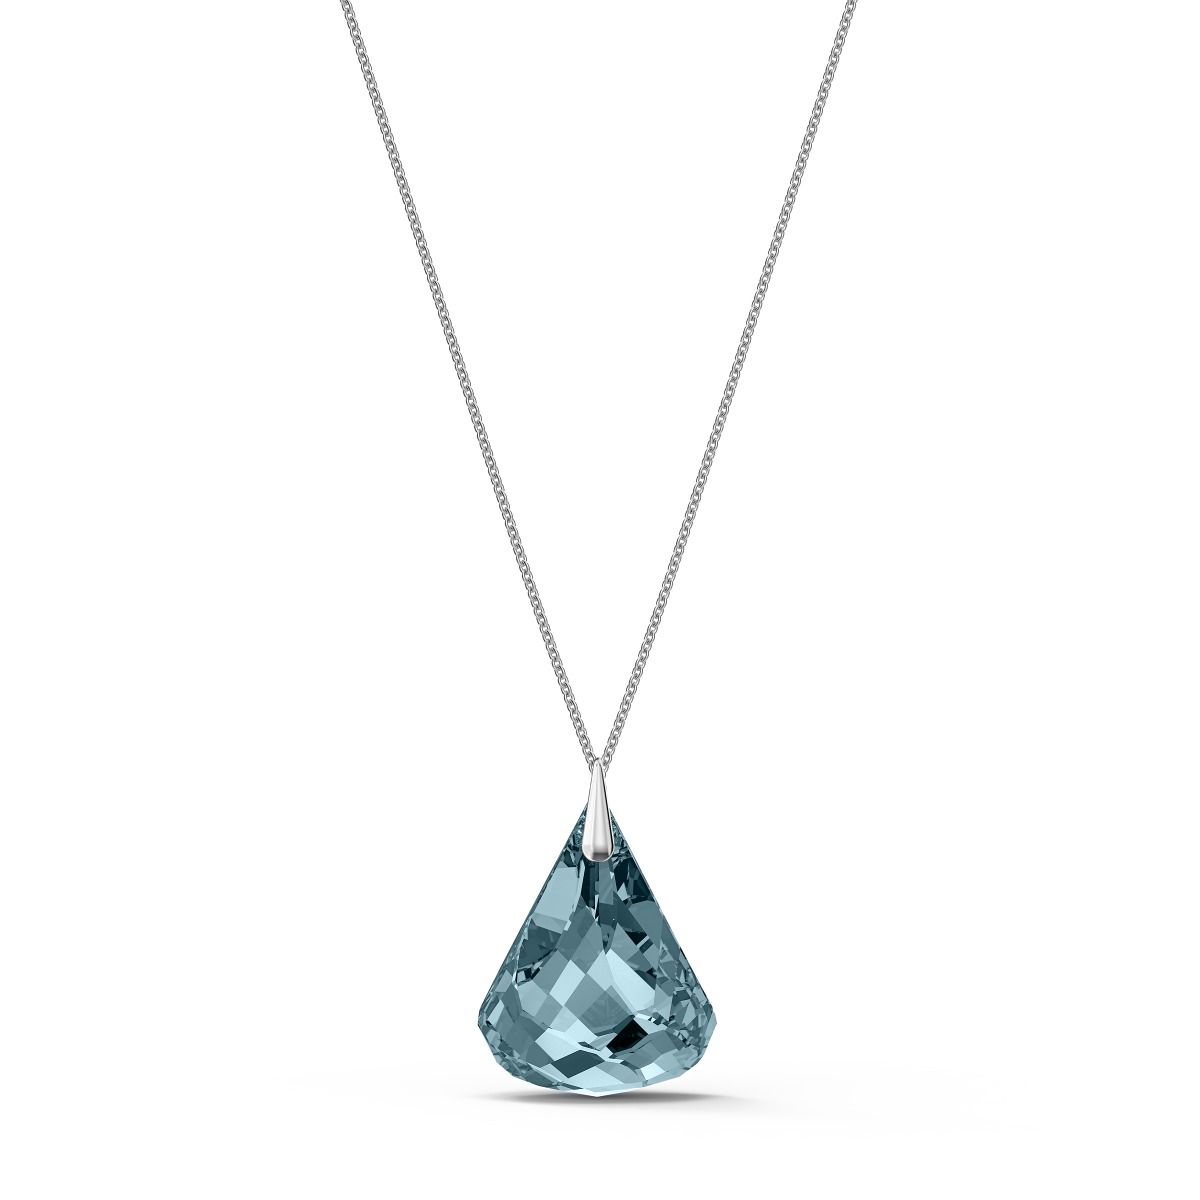 Buy Swarovski Spirit Necklace - Blue Online in UK